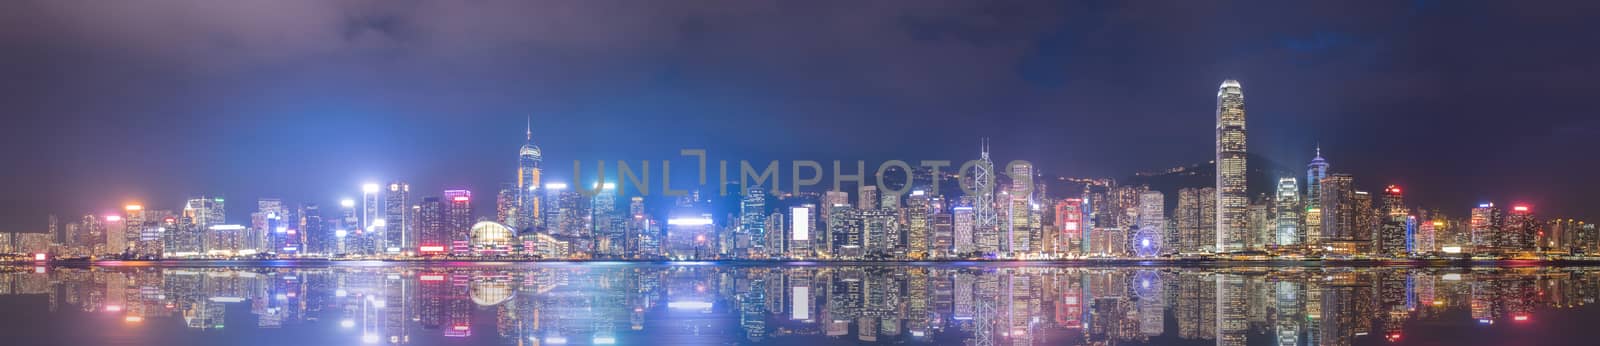 Hongkong Skyline Night View Panorama by Surasak